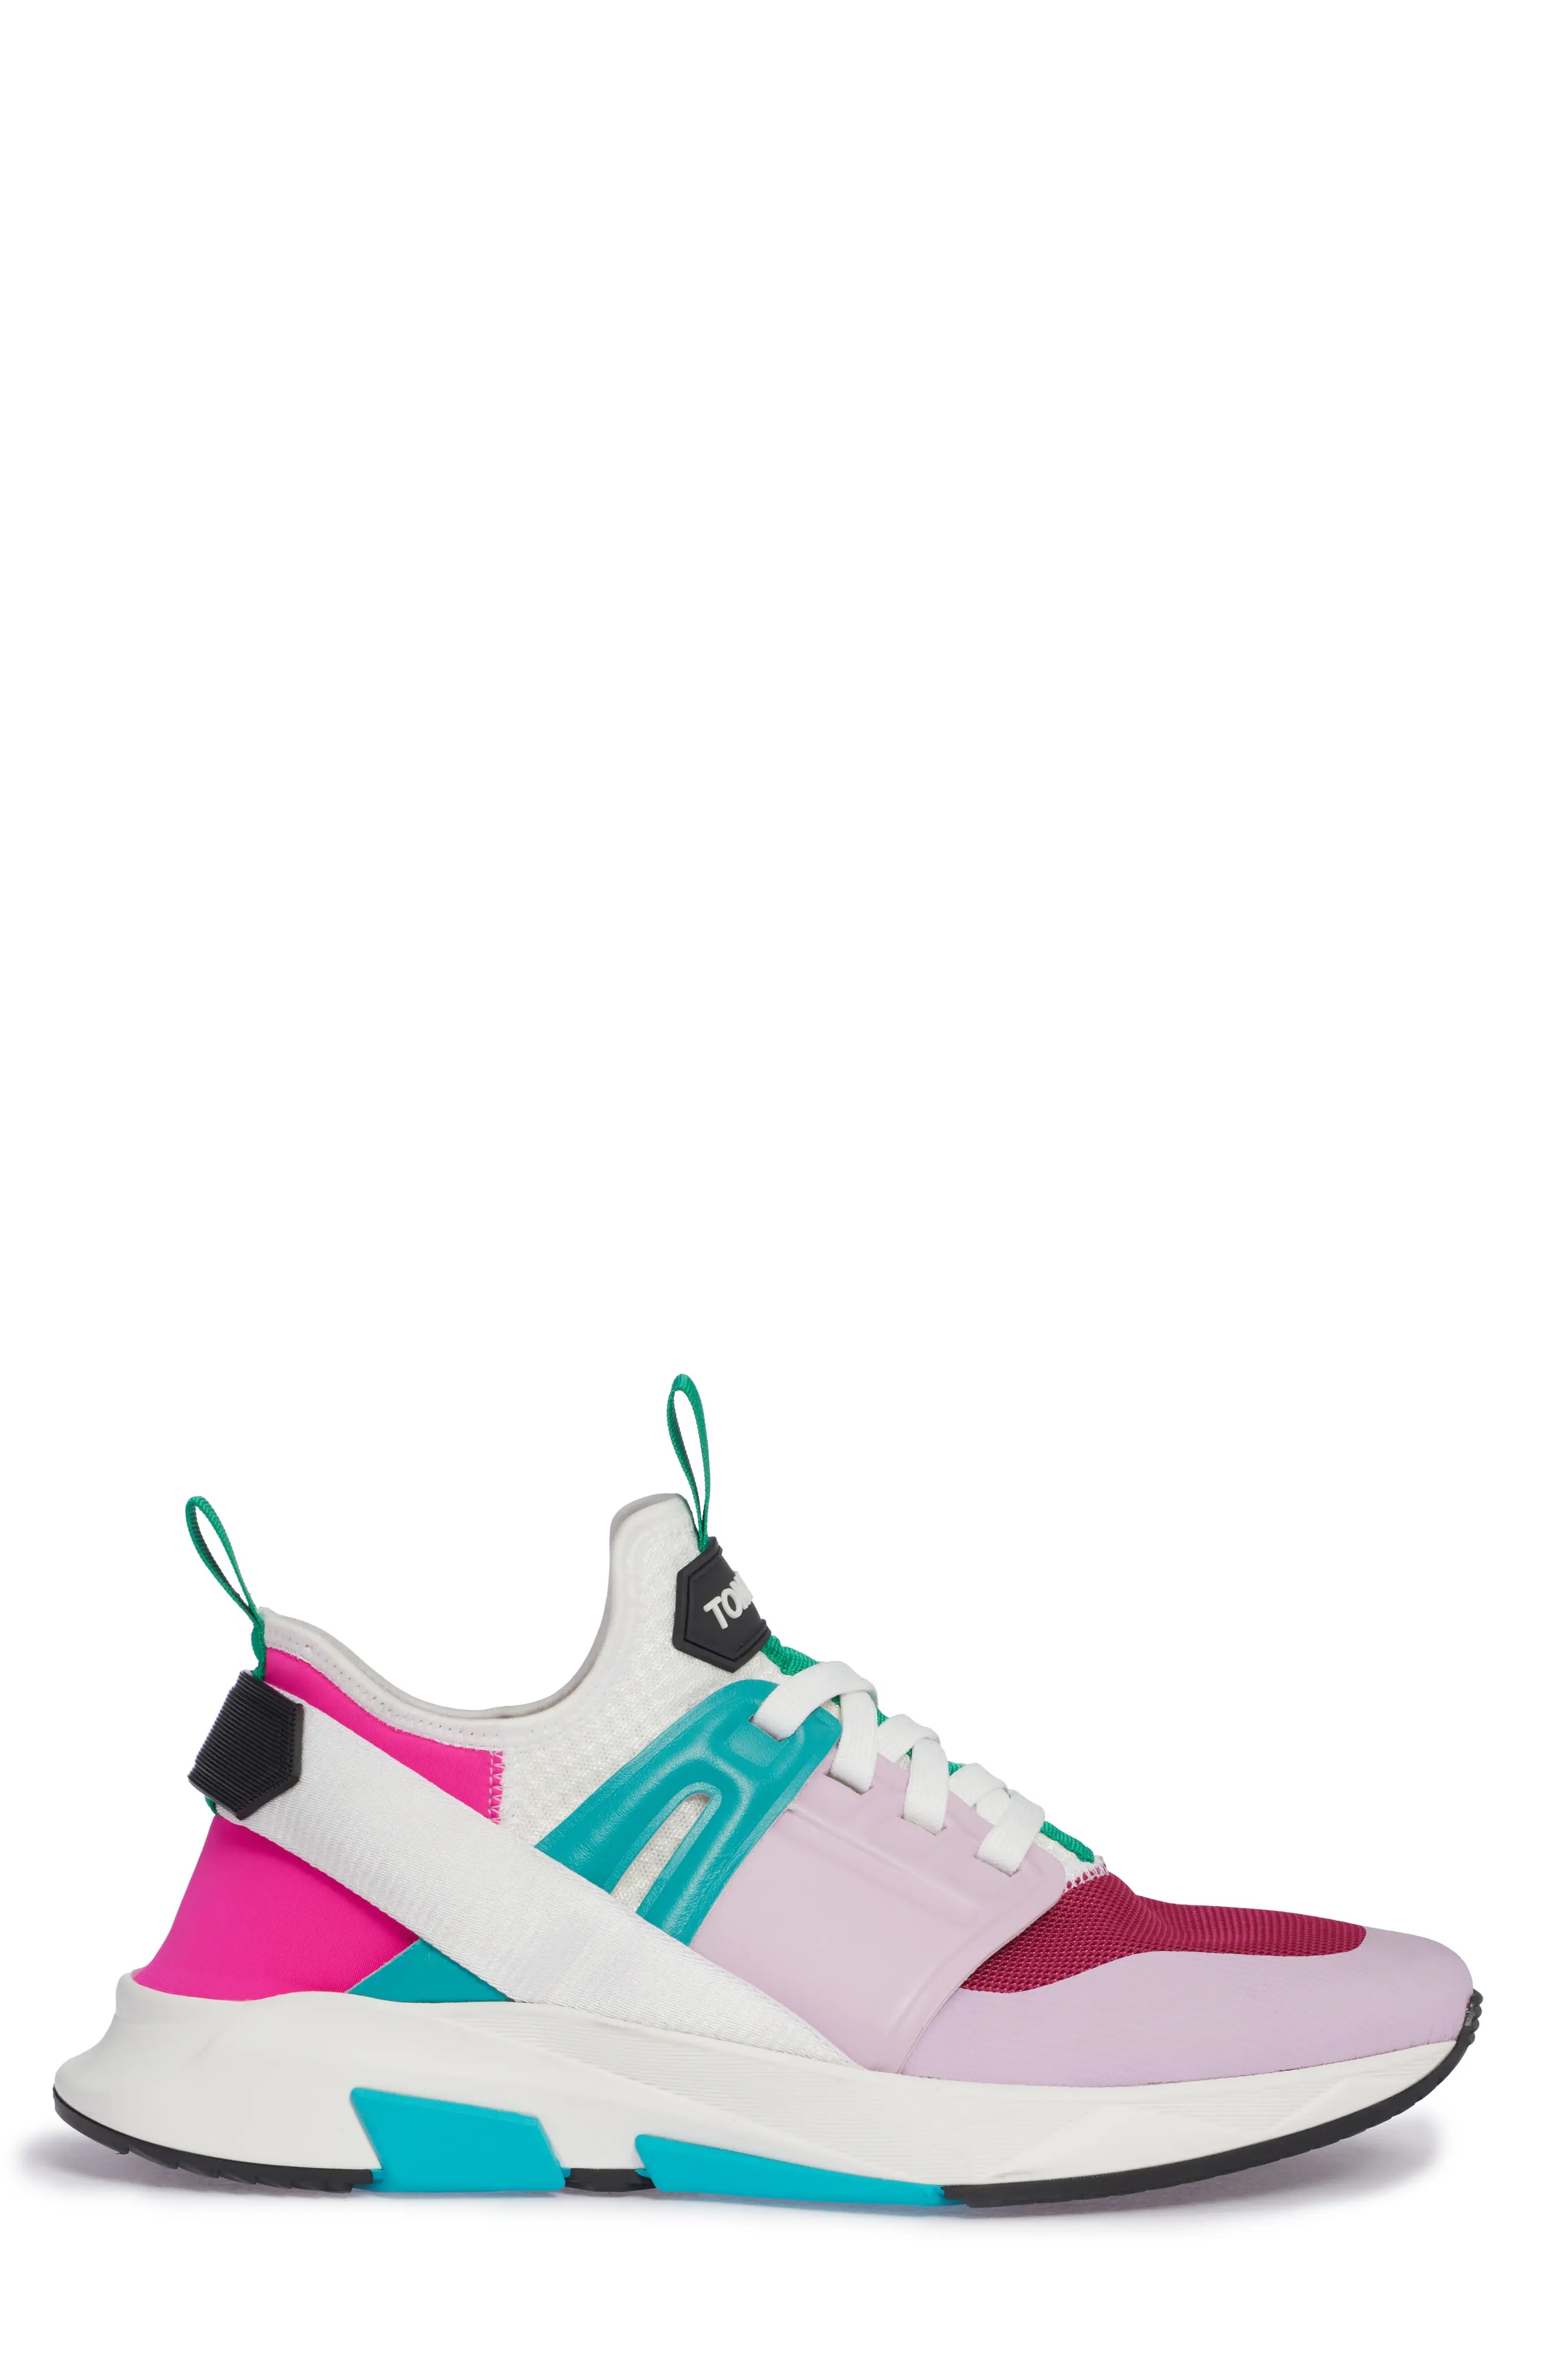 Jago Mixed Media Sneaker in Fuchsia/Pink/White - 3